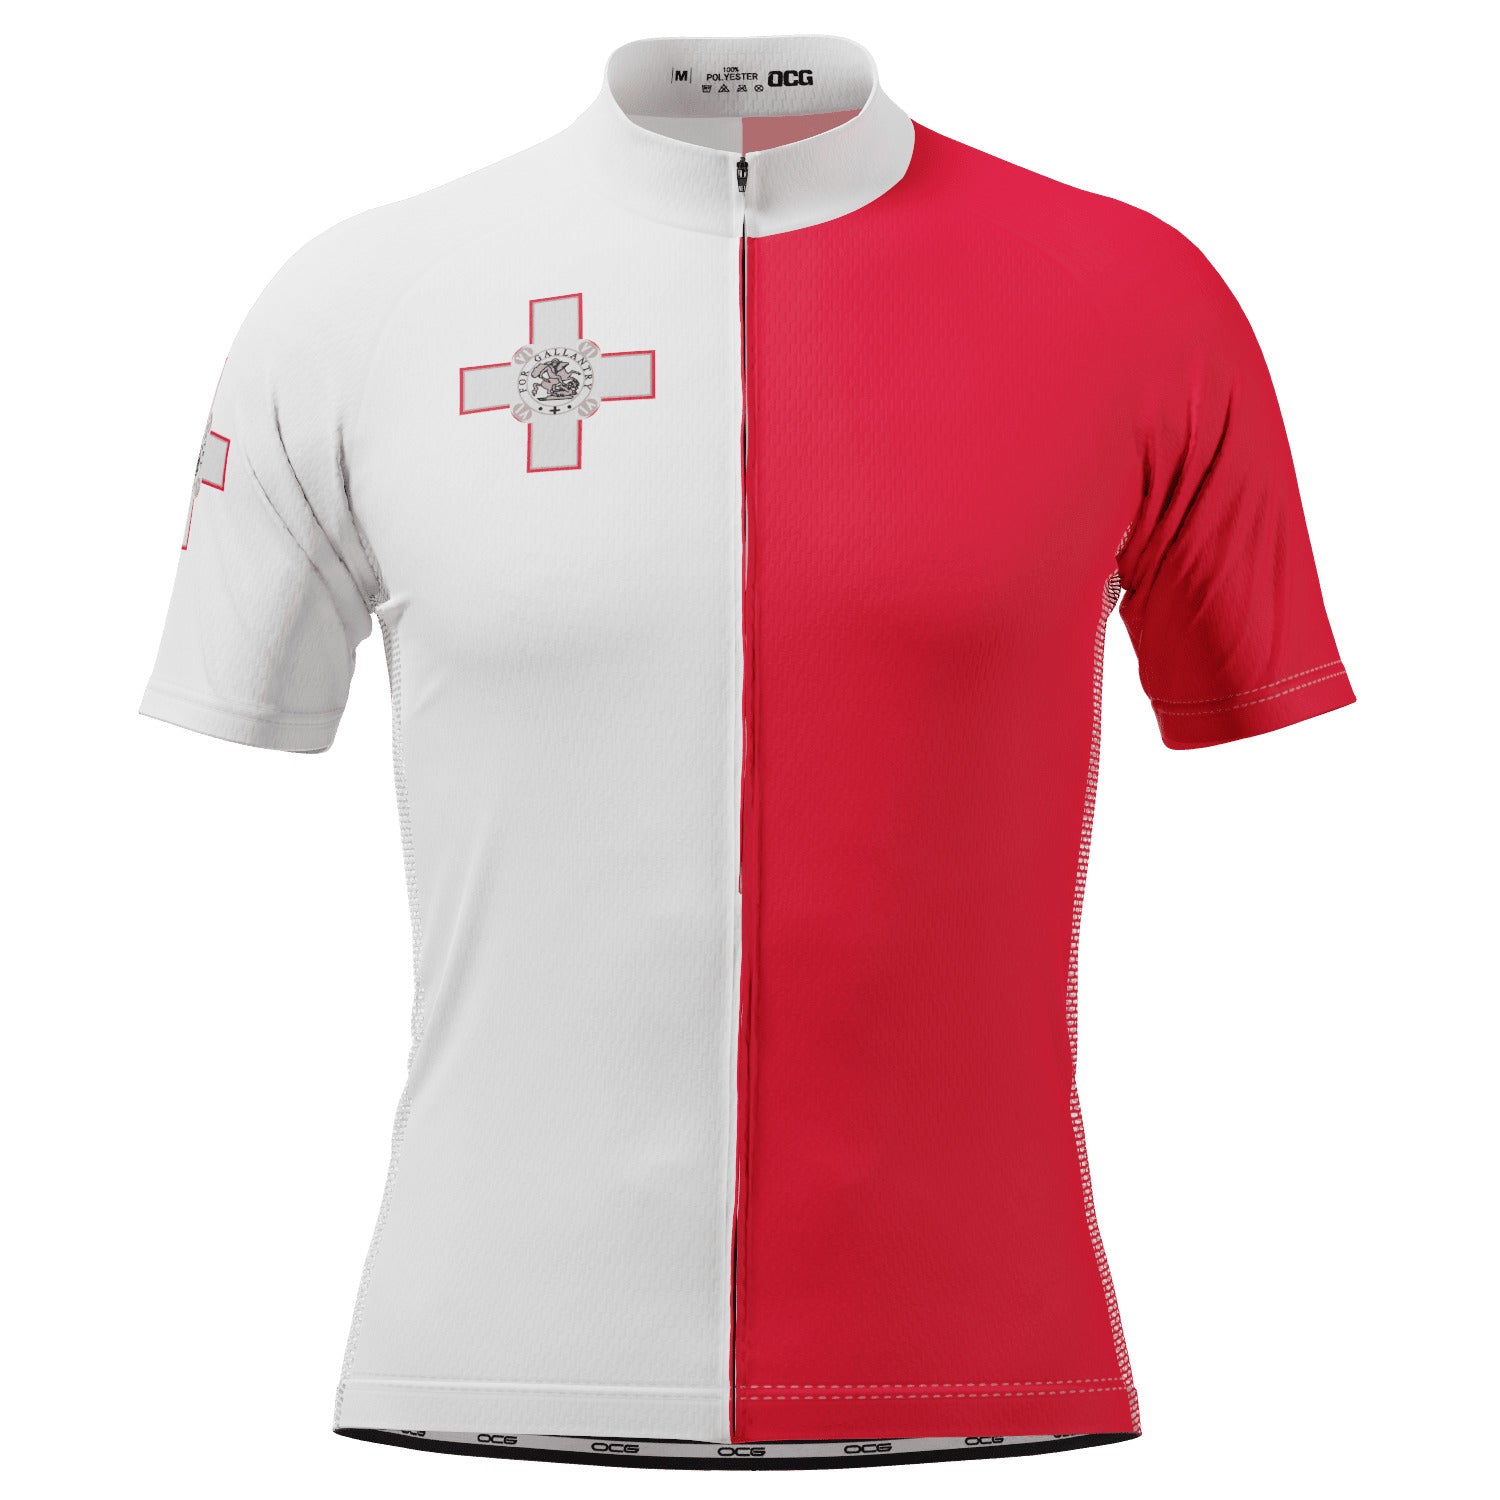 Men's Malta National Flag Short Sleeve Cycling Jersey